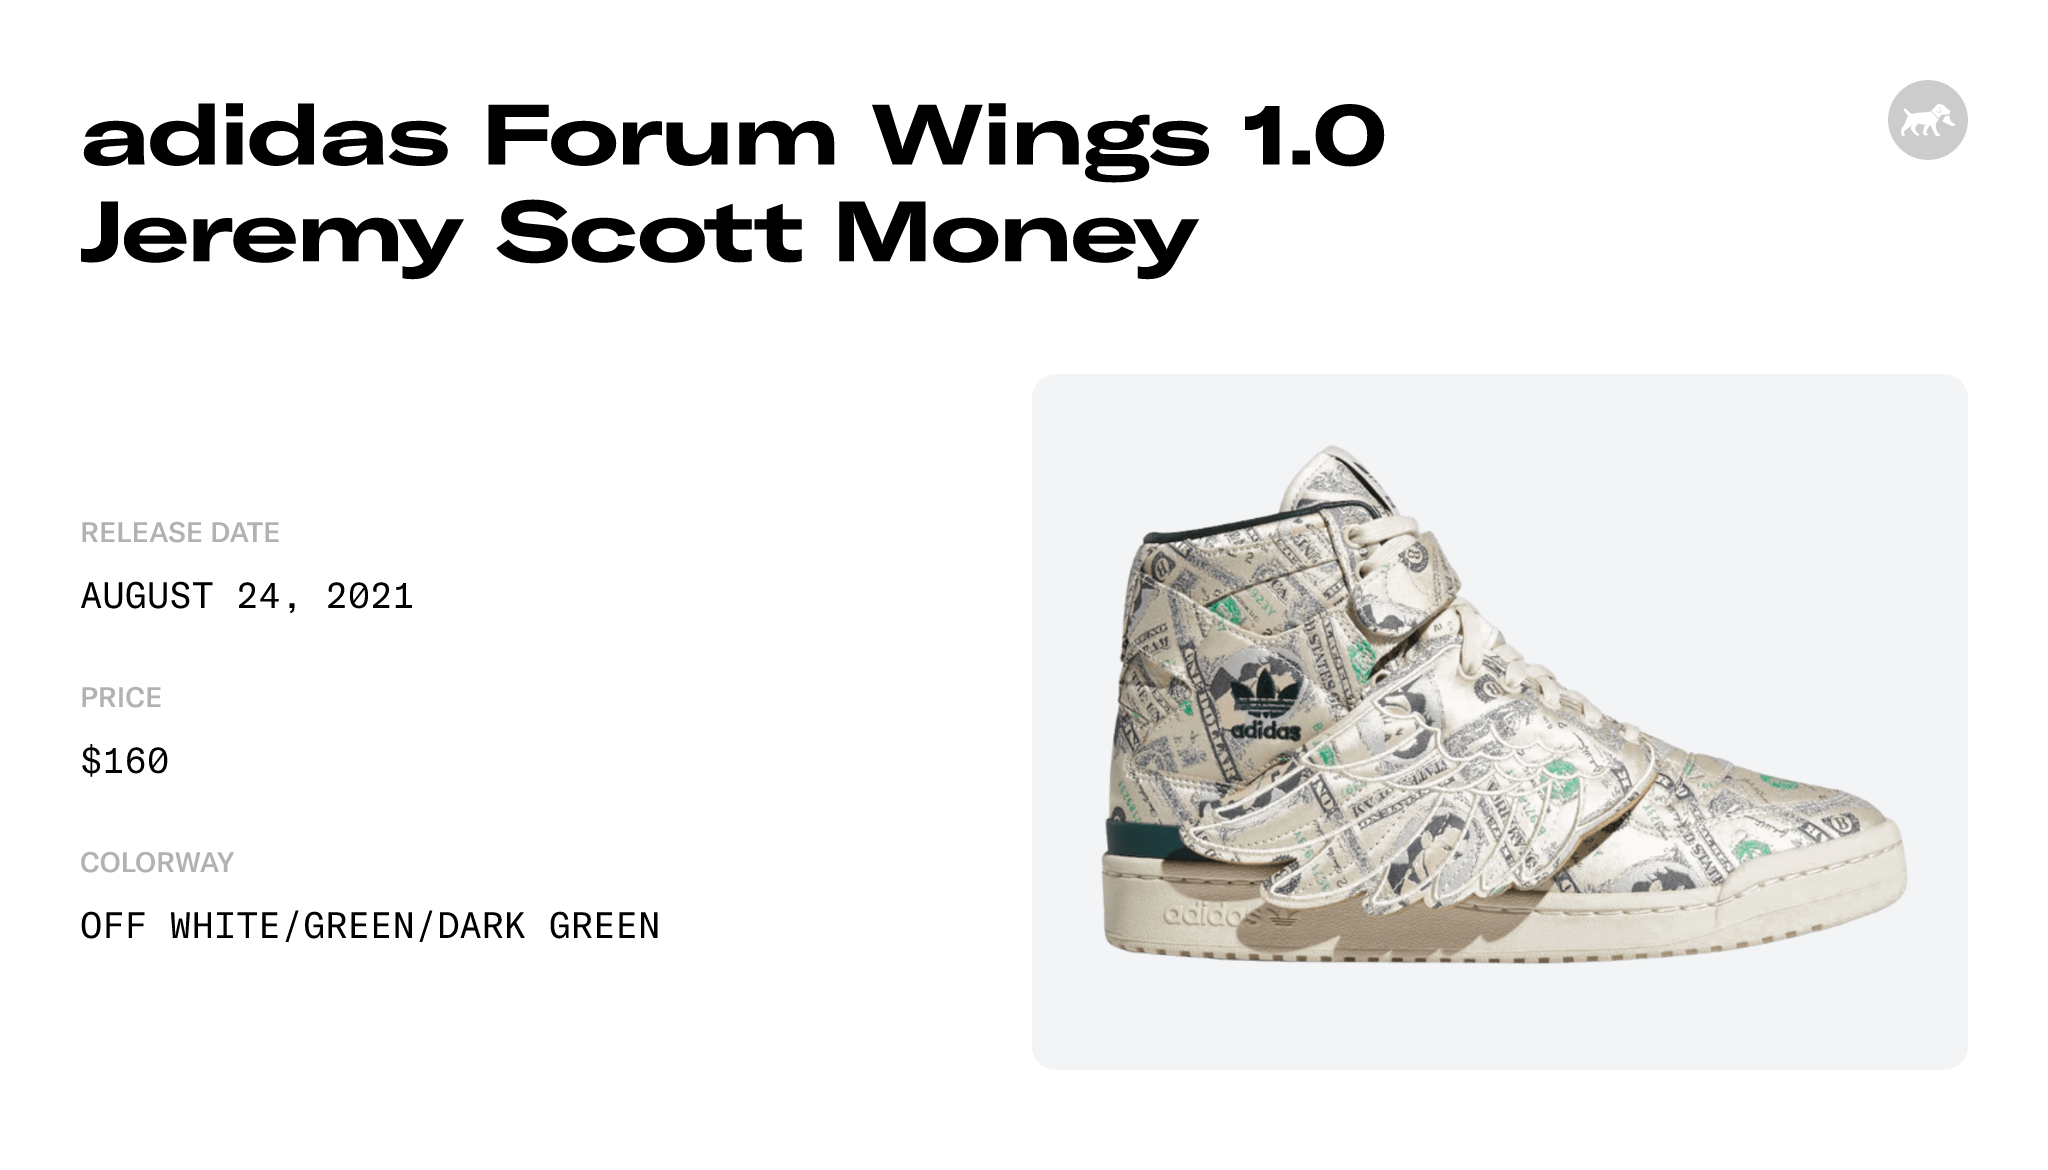 adidas Forum Wings 1.0 Jeremy Scott Money - Q46154 Raffles and Release Date